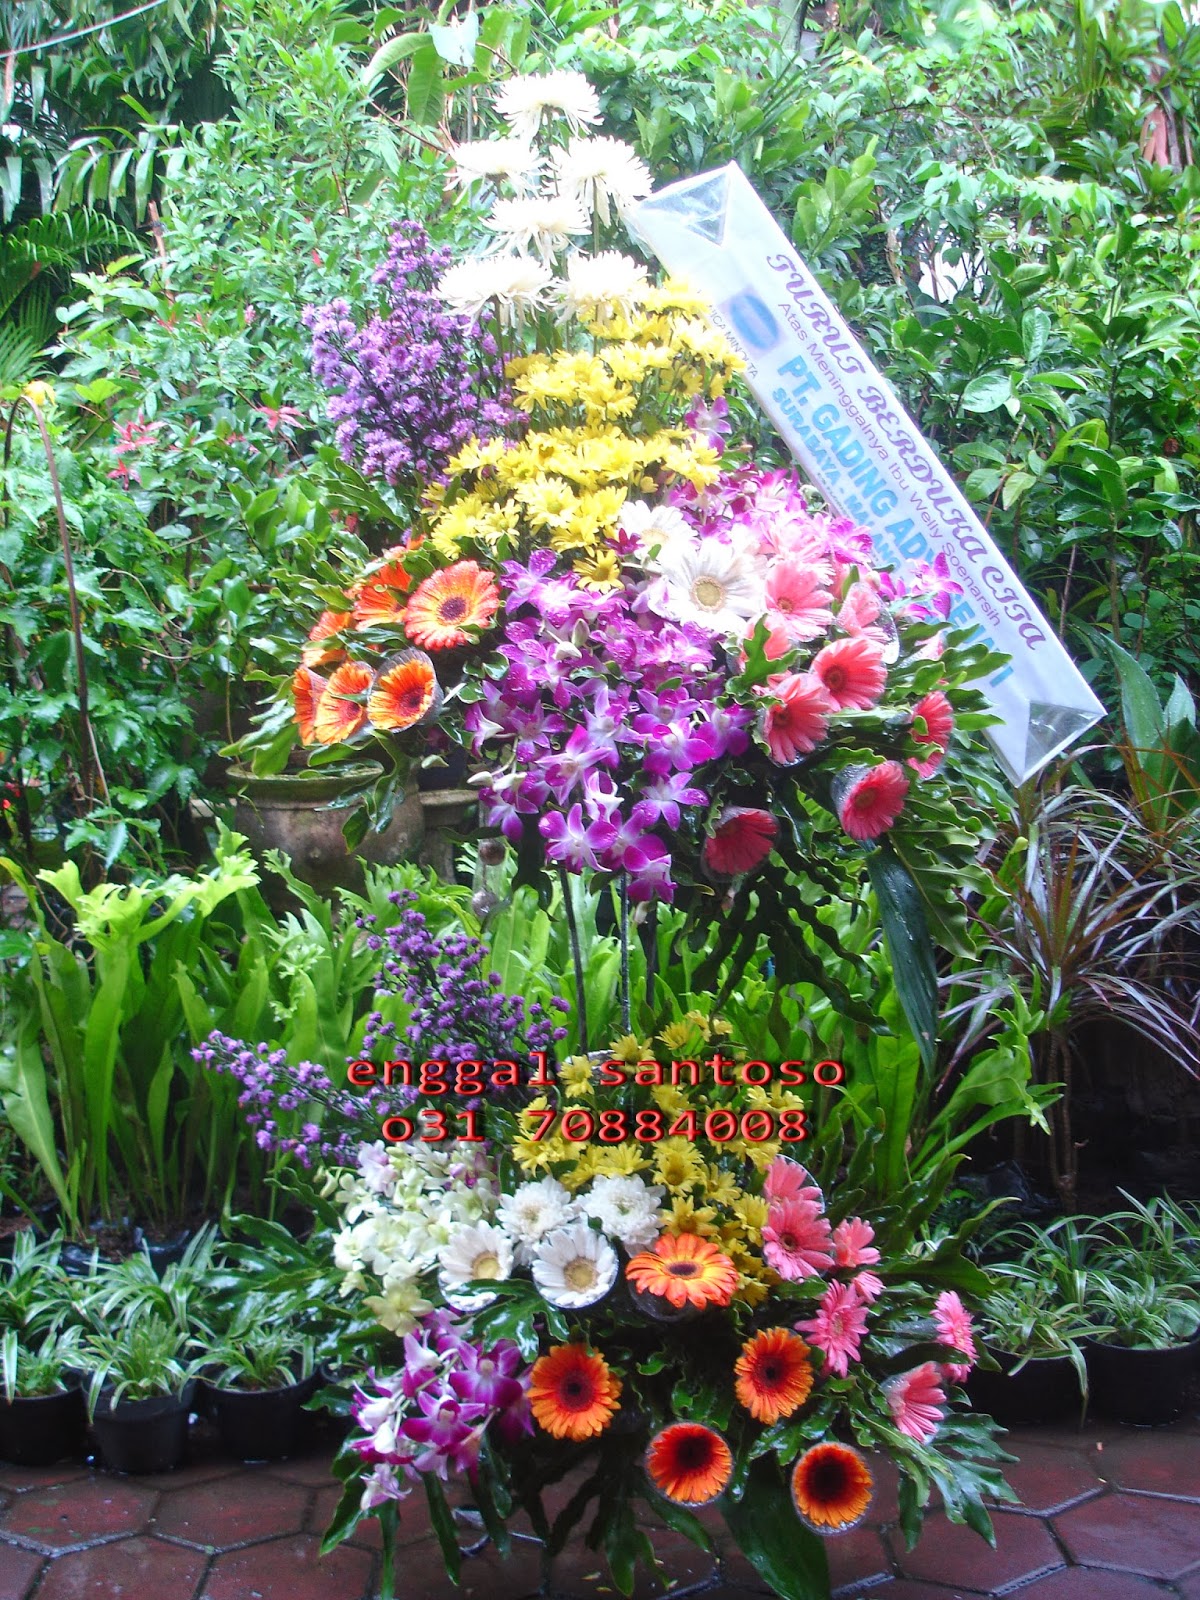 toko bunga gresik 085733331108 macam macam rangkaian bunga 